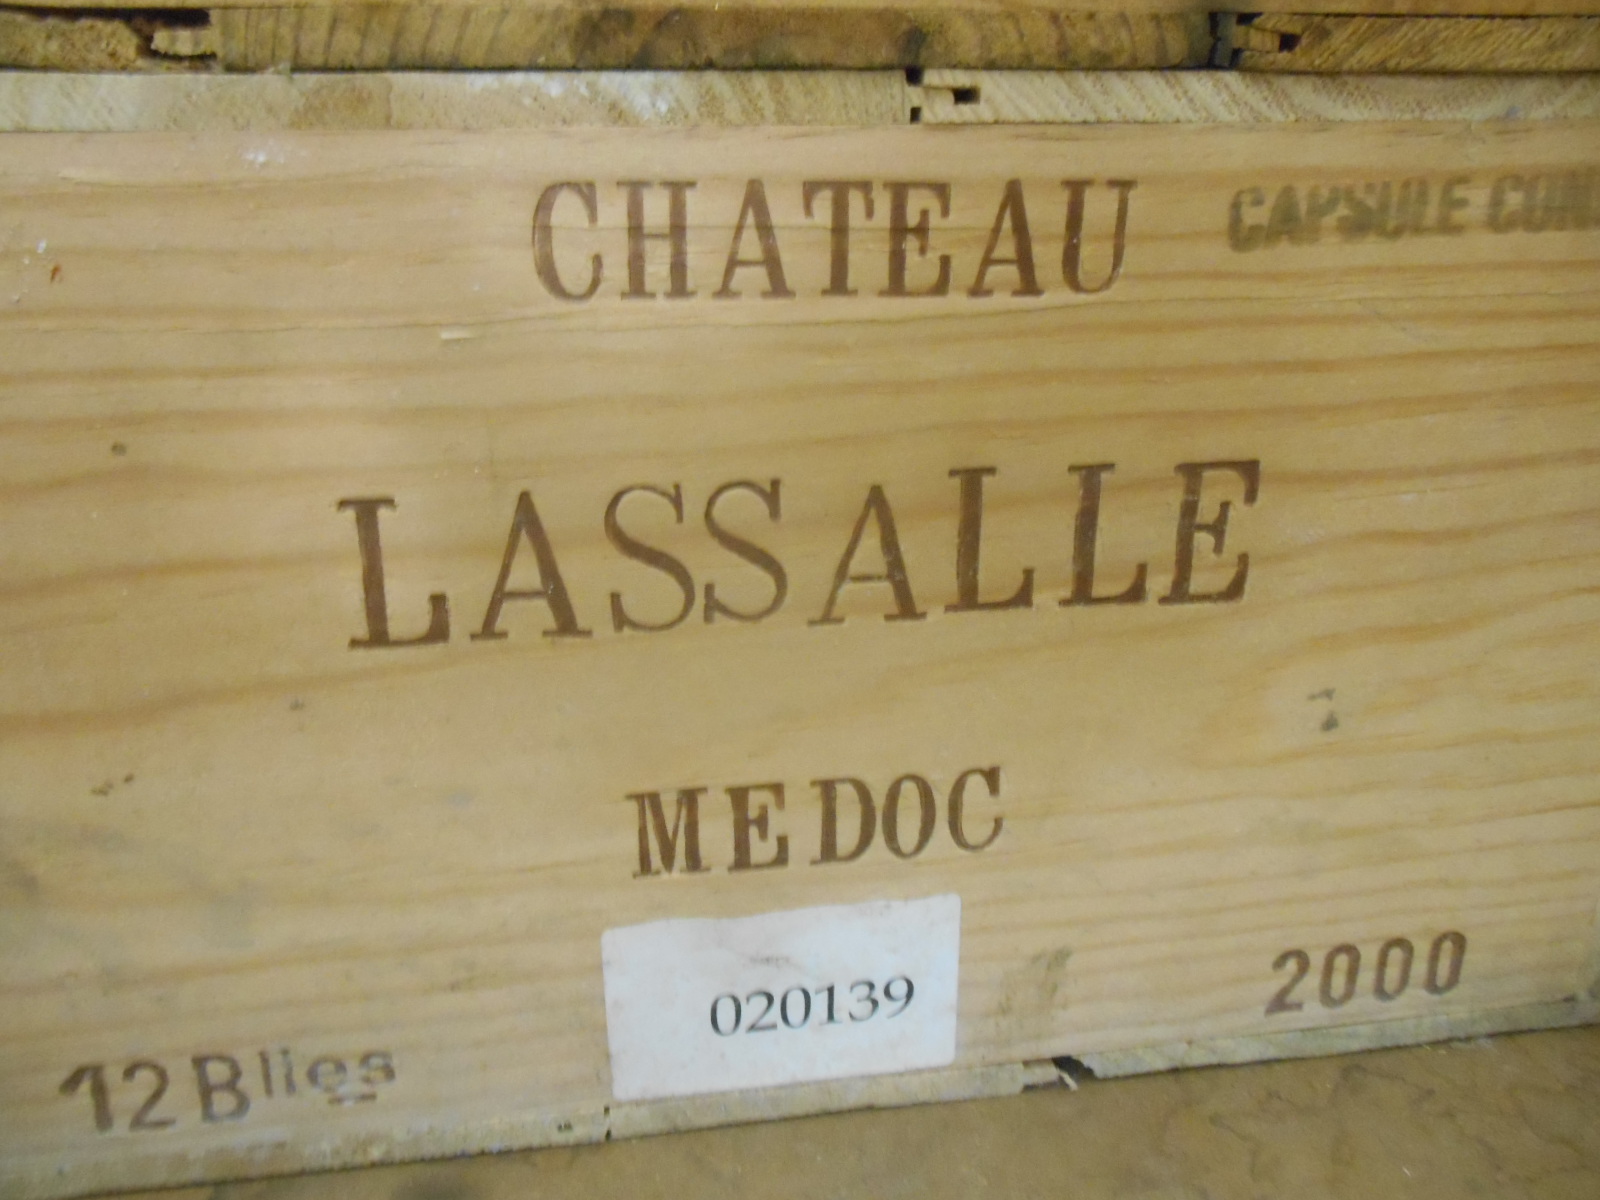 Chateau Lasalle, Medoc 2000, twelve bottles in owc